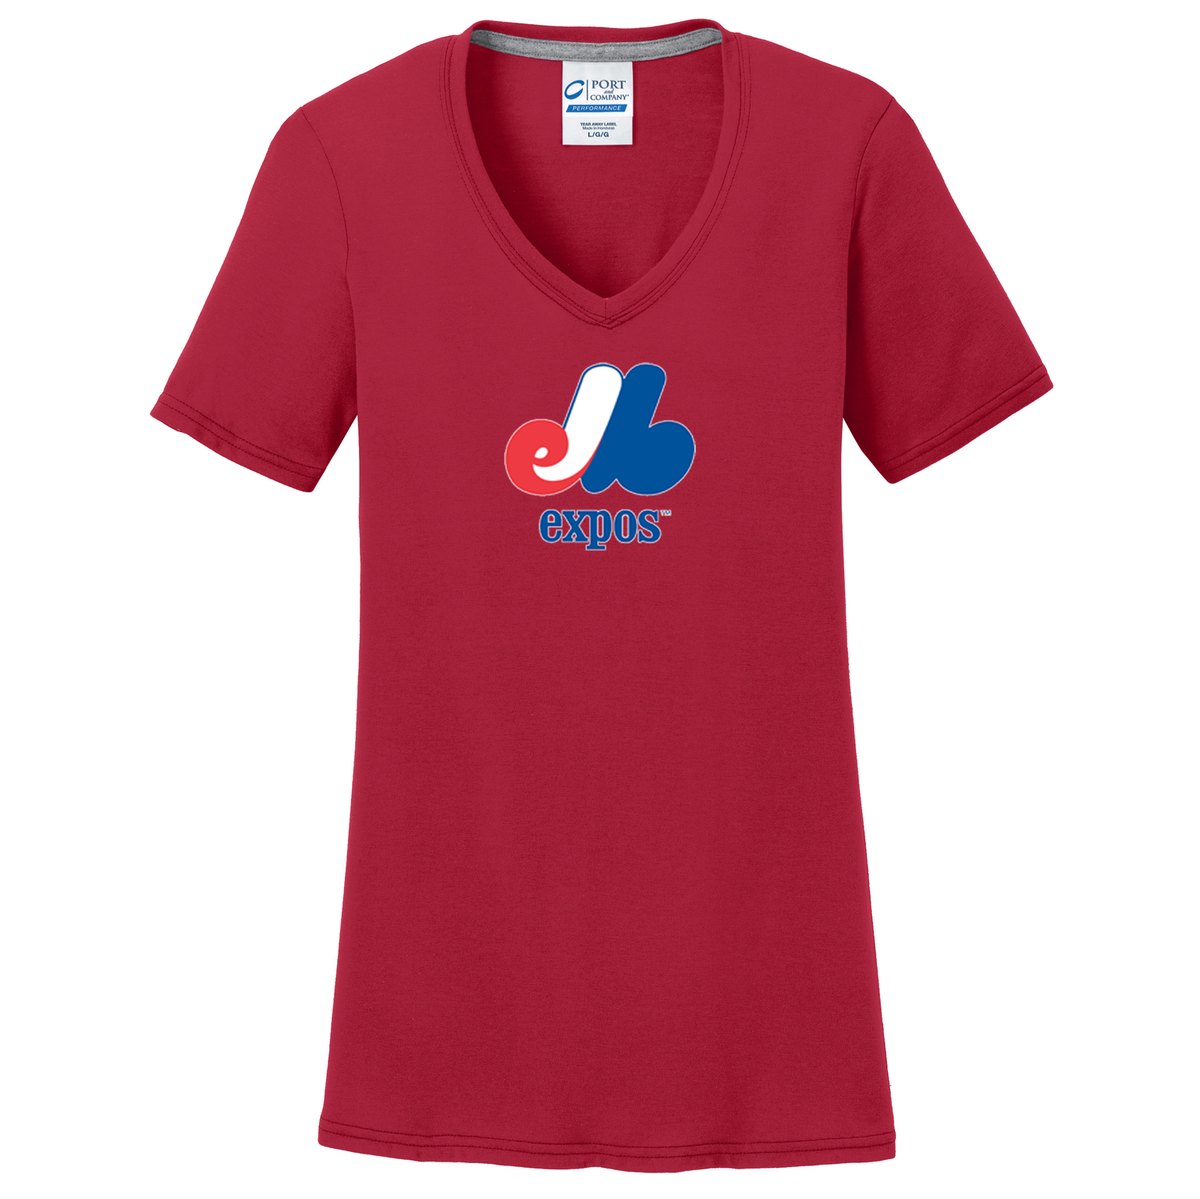 Expos Softball  Women's T-Shirt